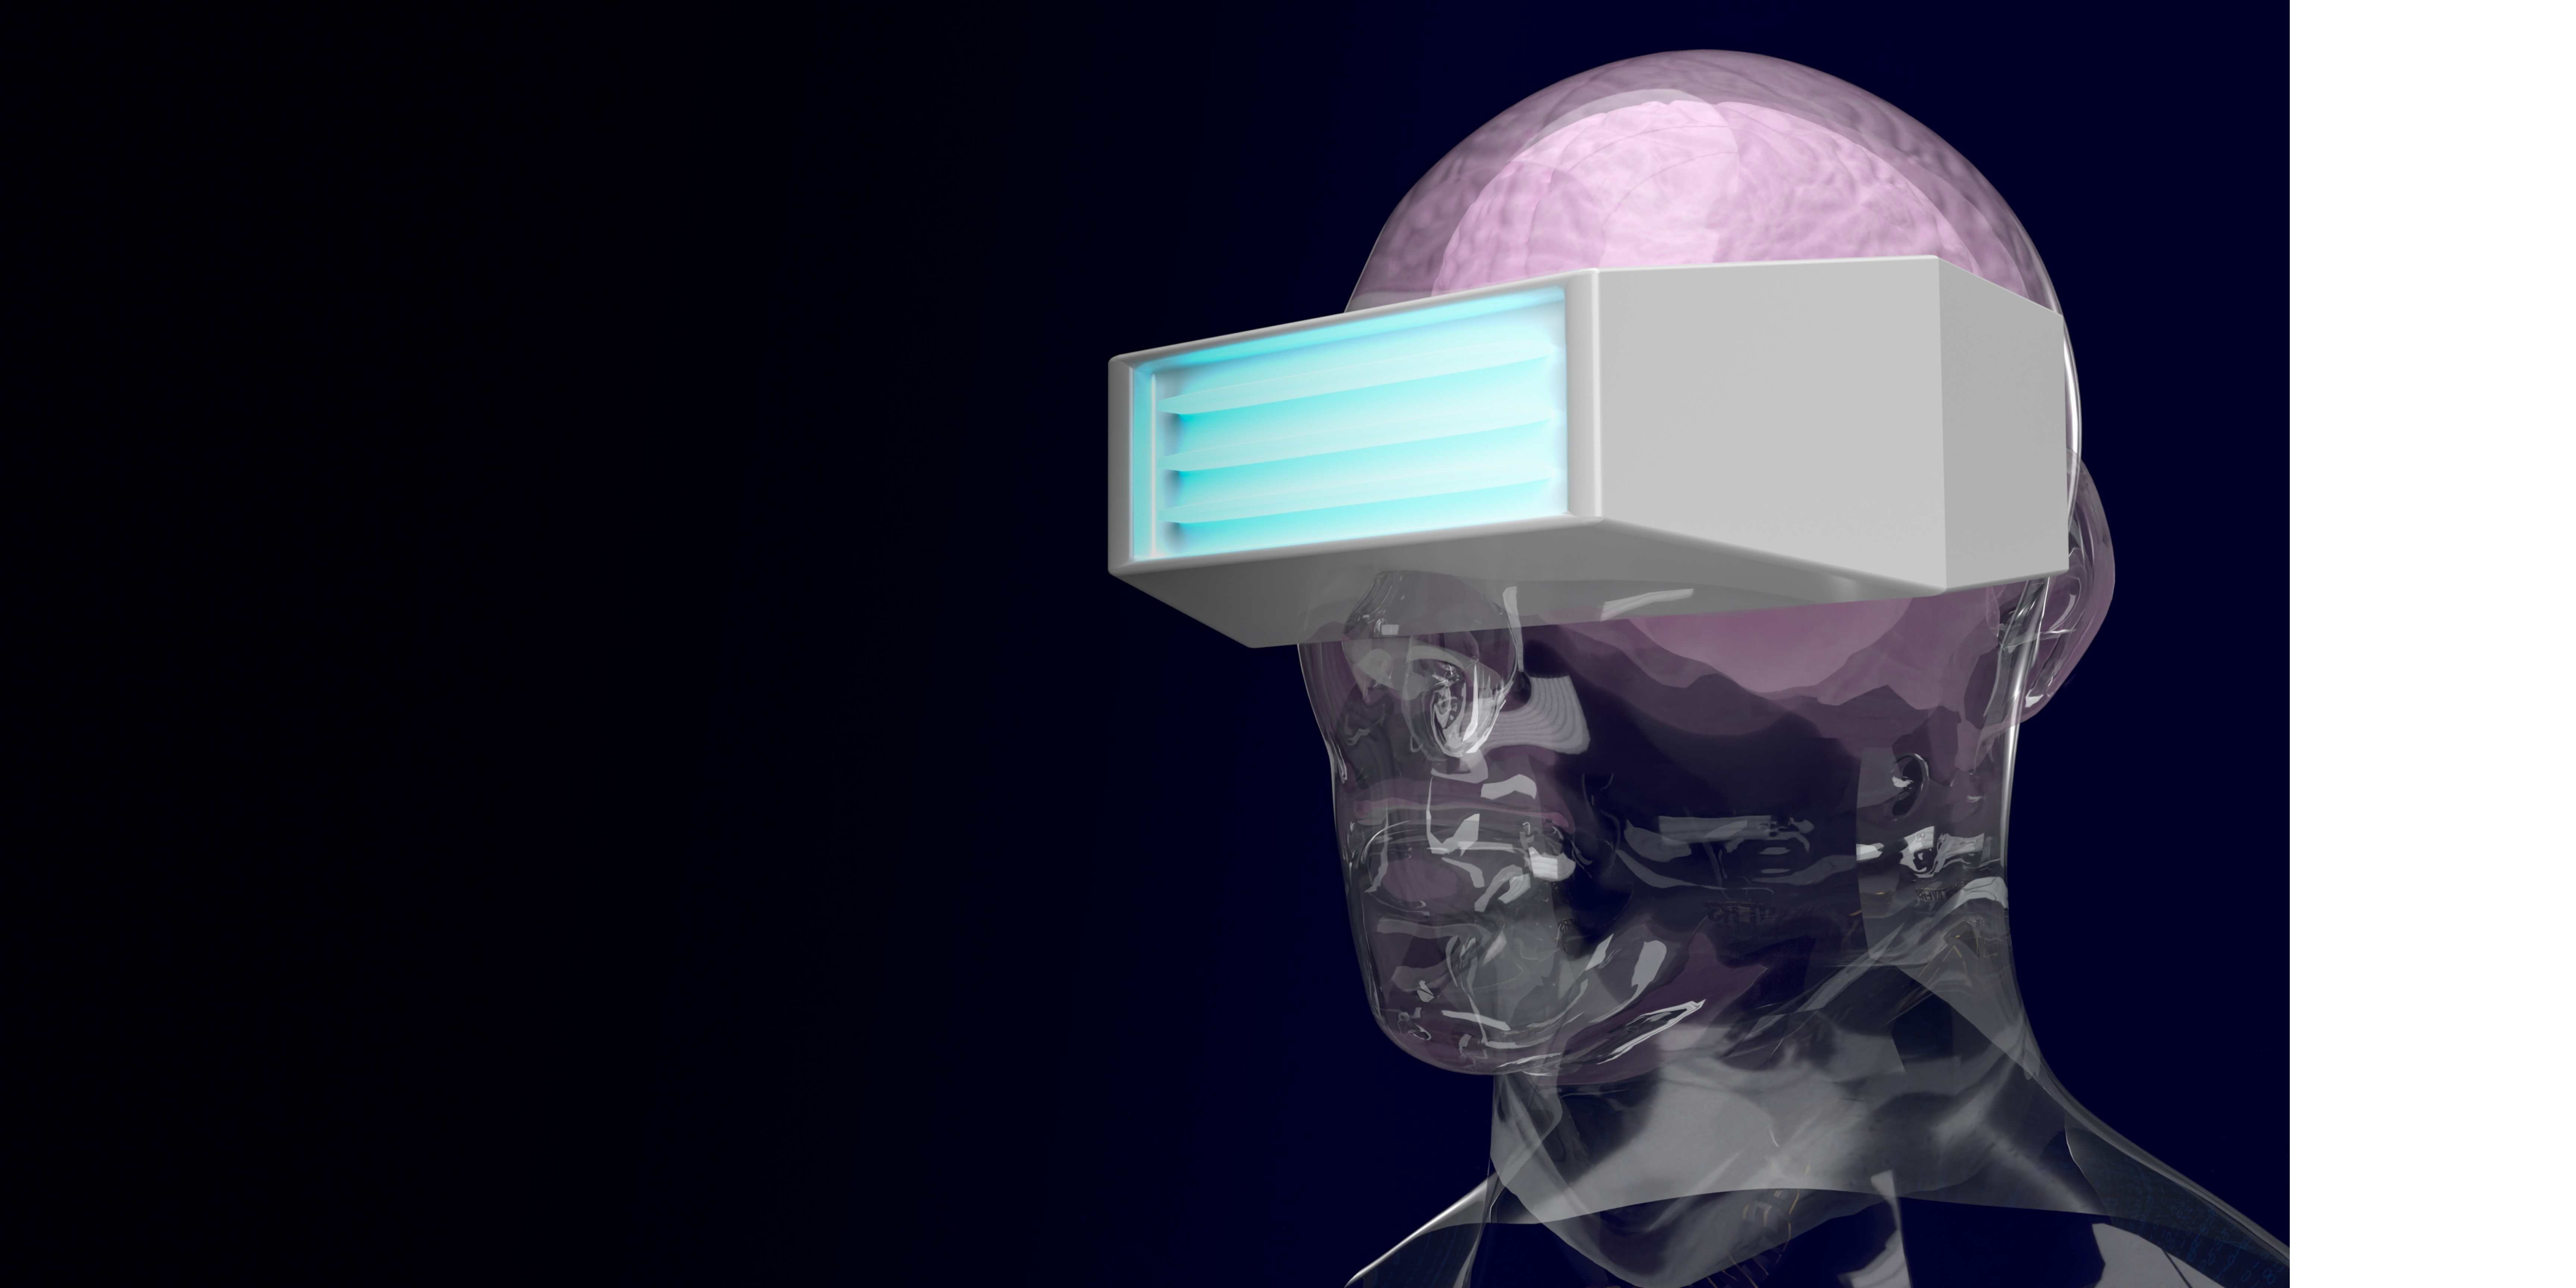 A hologram of a human wearing a virtual reality headset